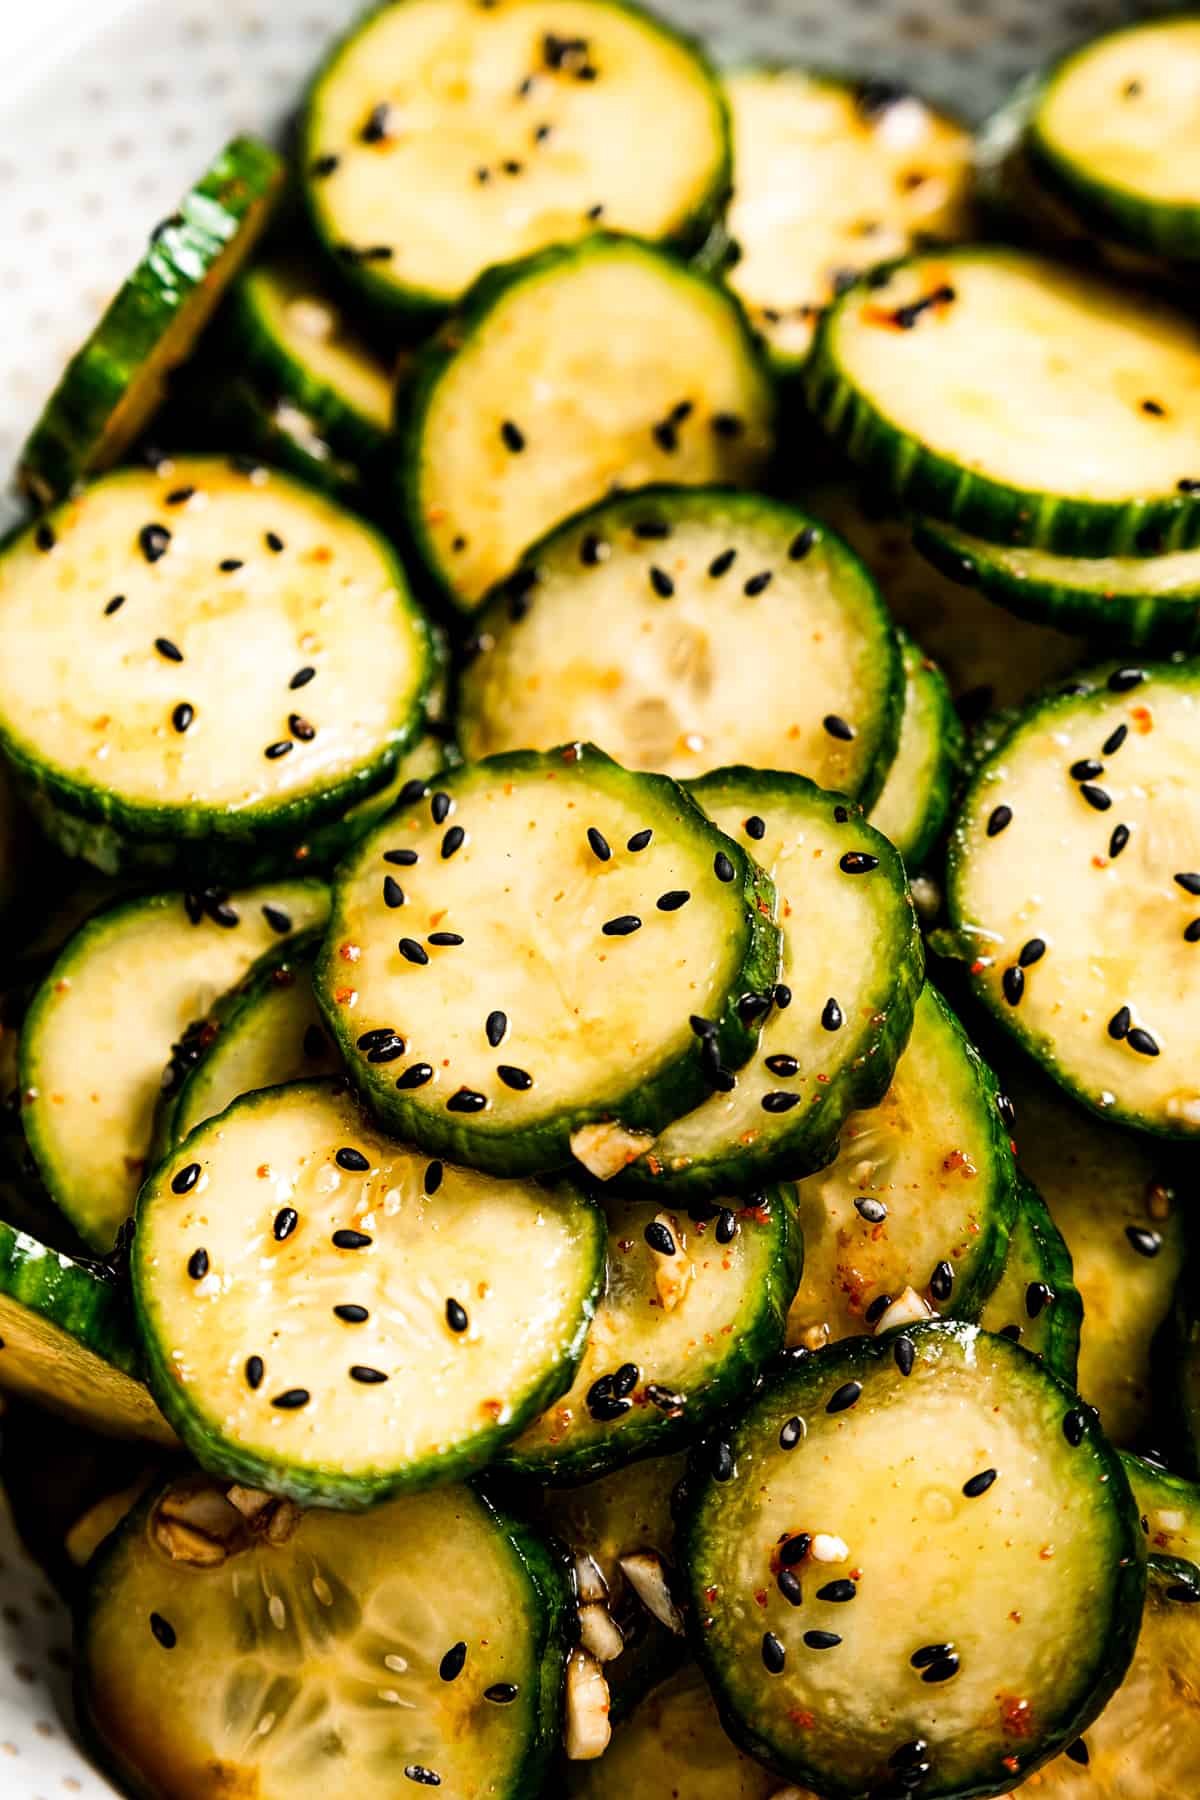 Close-up of Asian cucumber salad garnished with black sesame seeds.